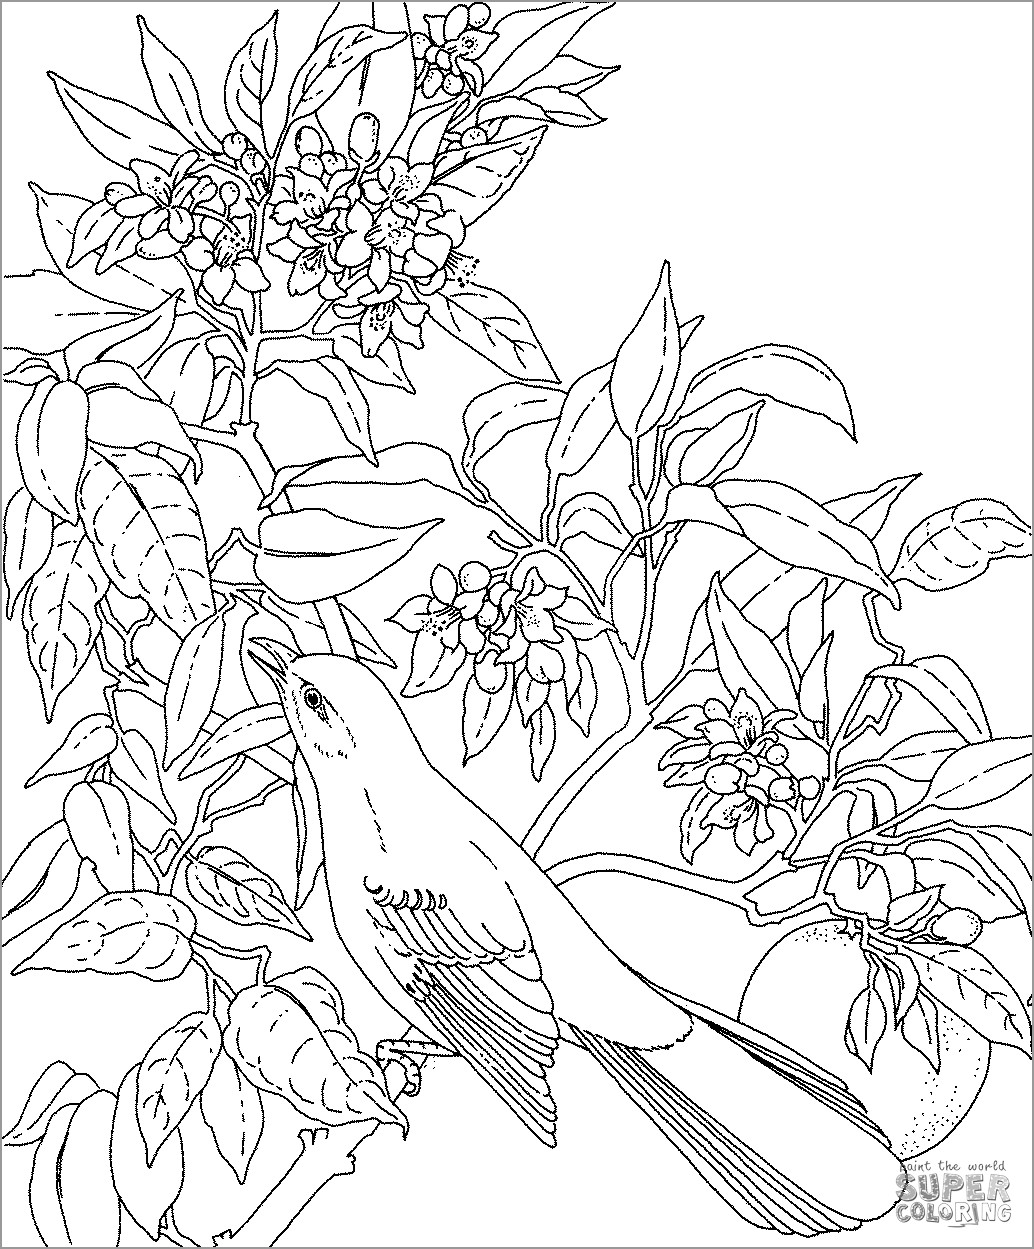 Mockingbird Coloring Page to Print